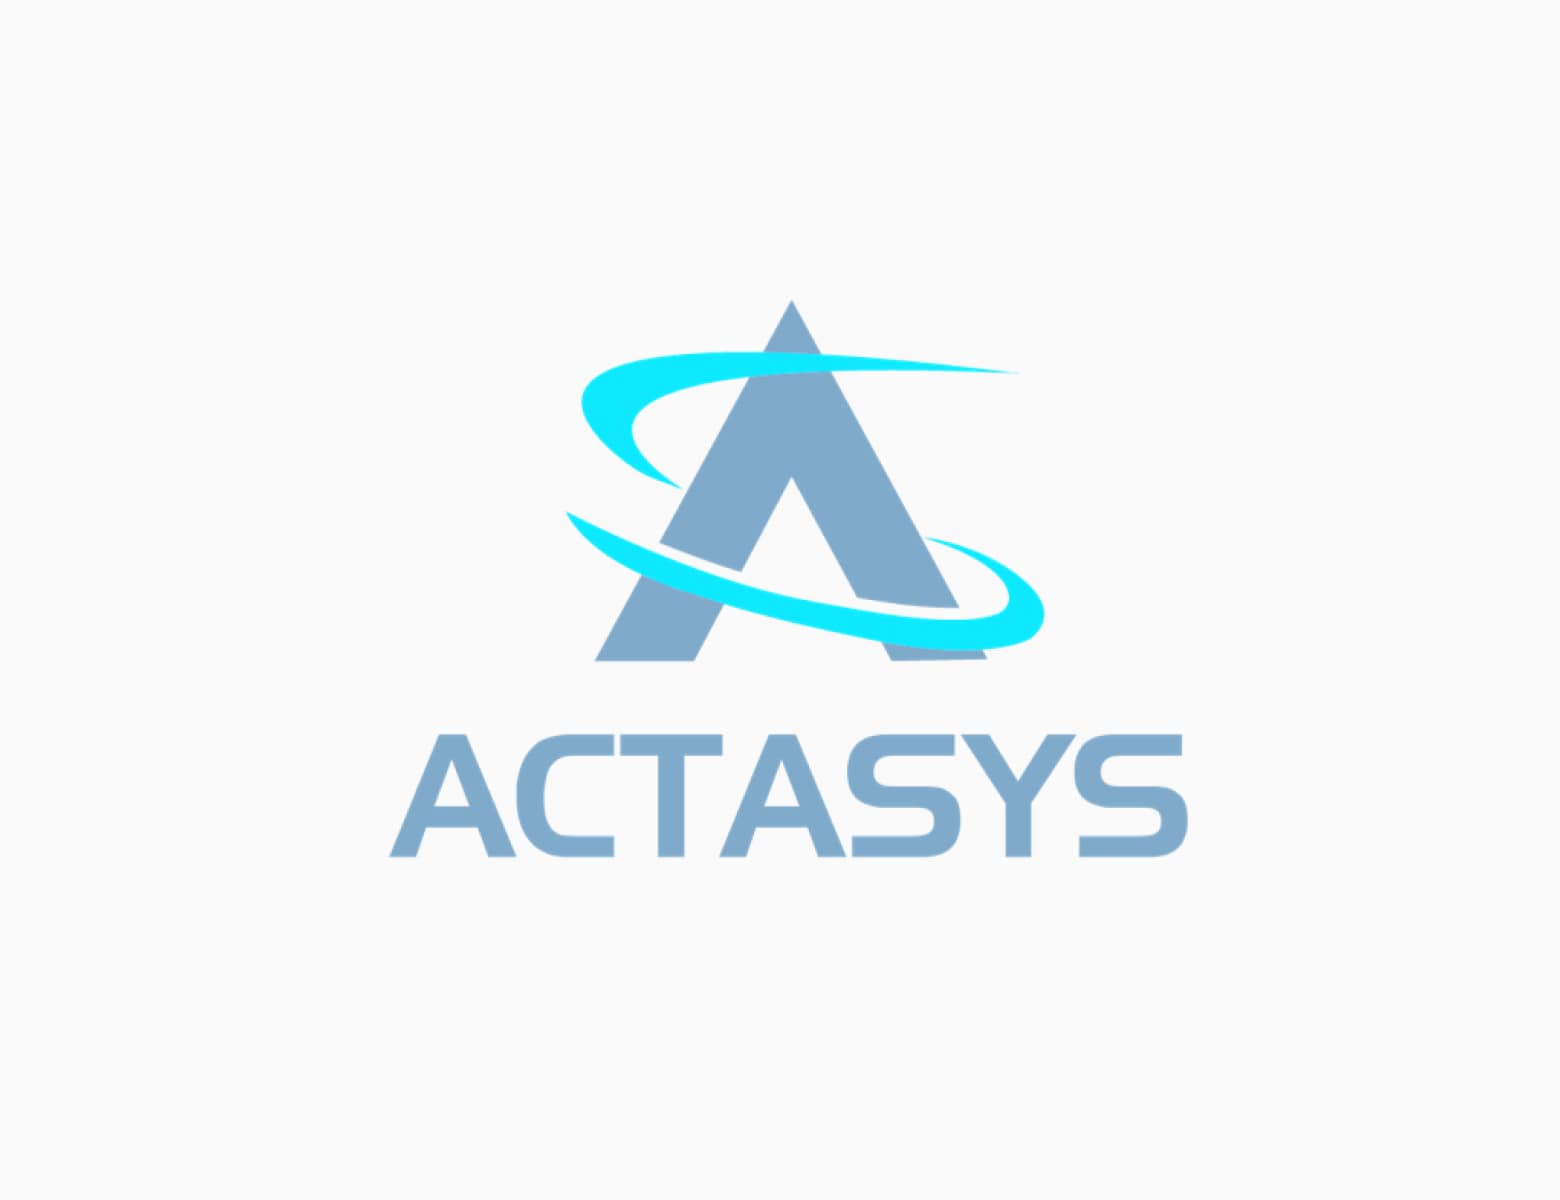 Actasys logo